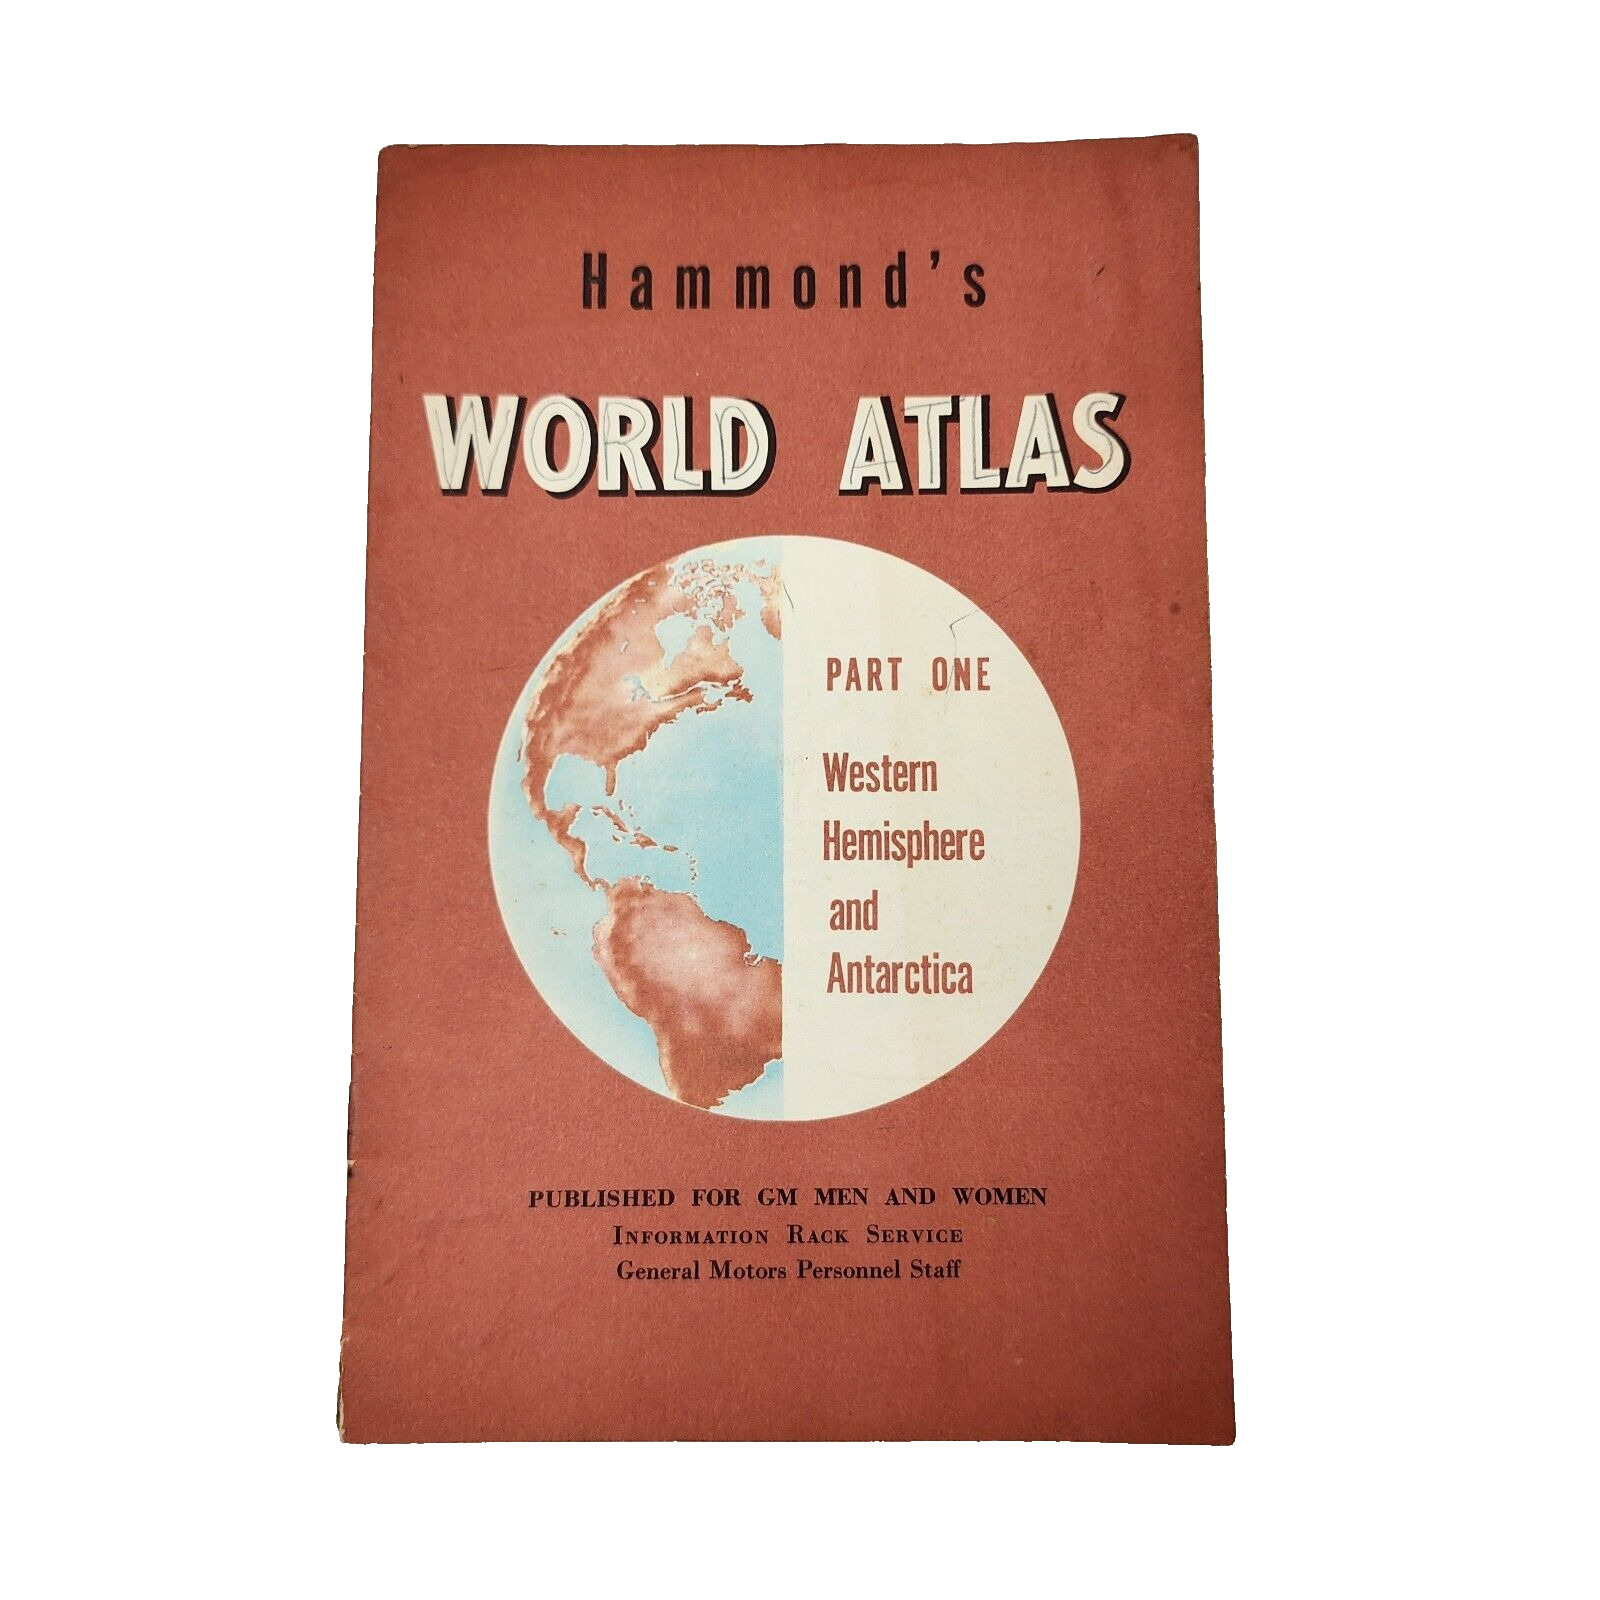 1950s GM General Motors Employee Rack Service Booklet, World Atlas, Cold War Era